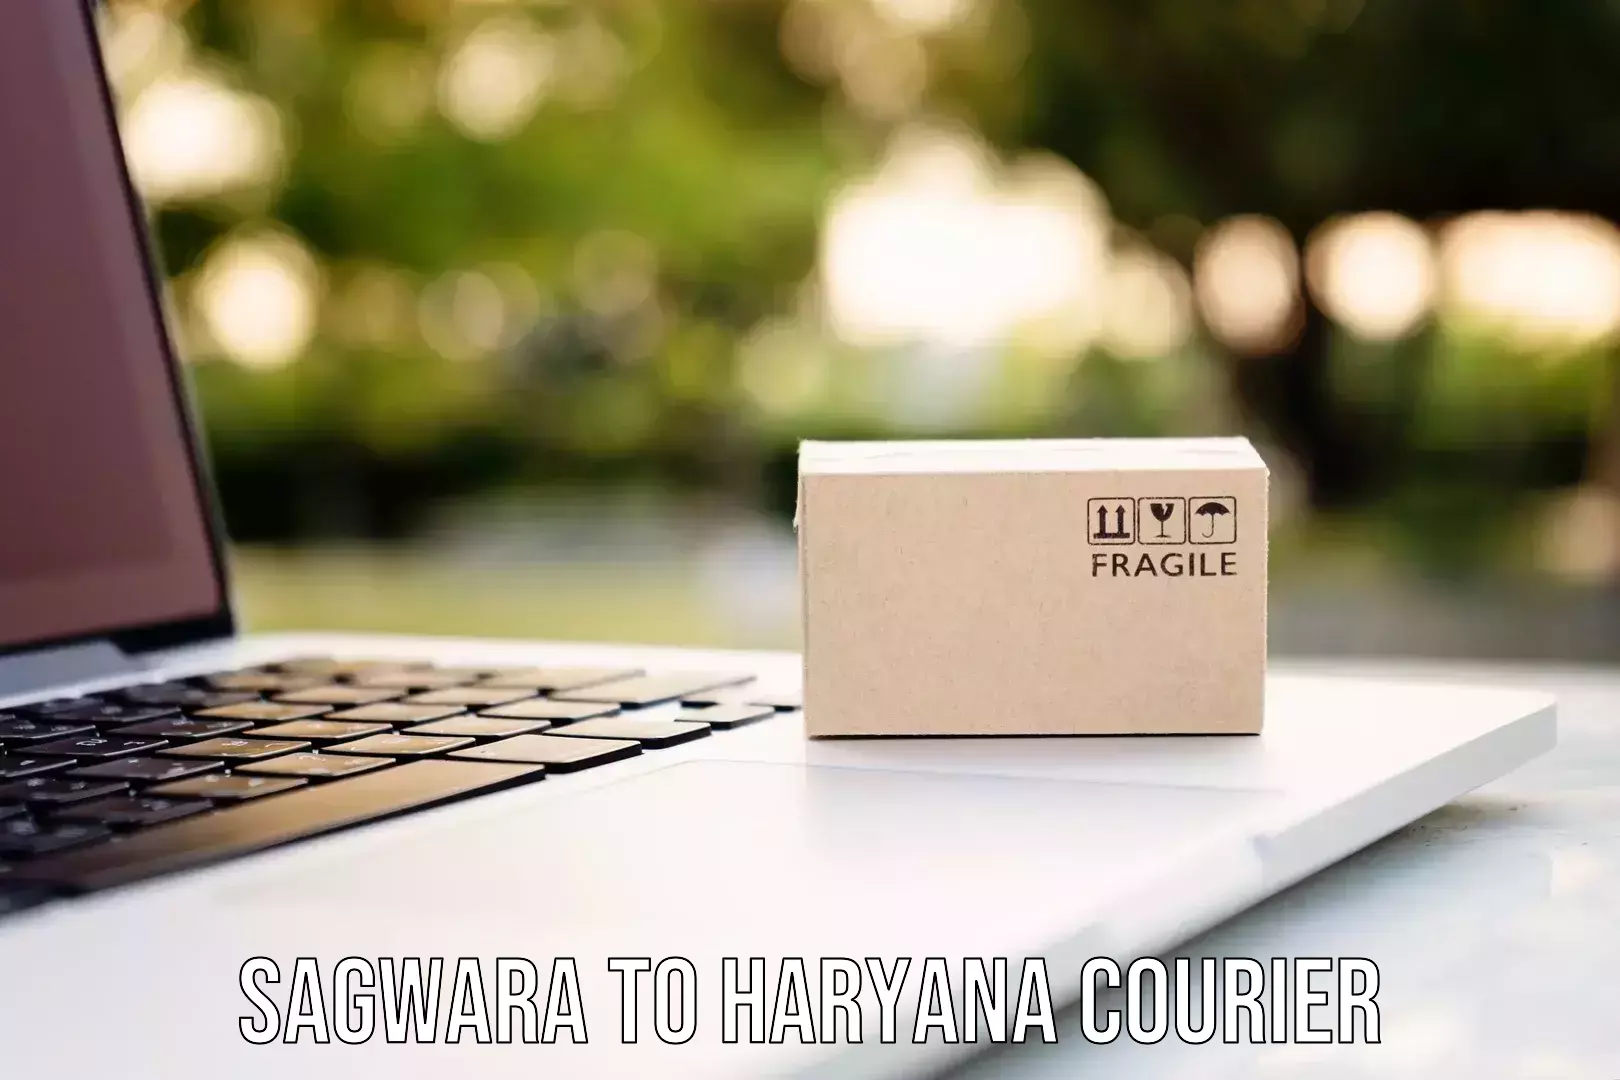 Cash on delivery service Sagwara to Haryana